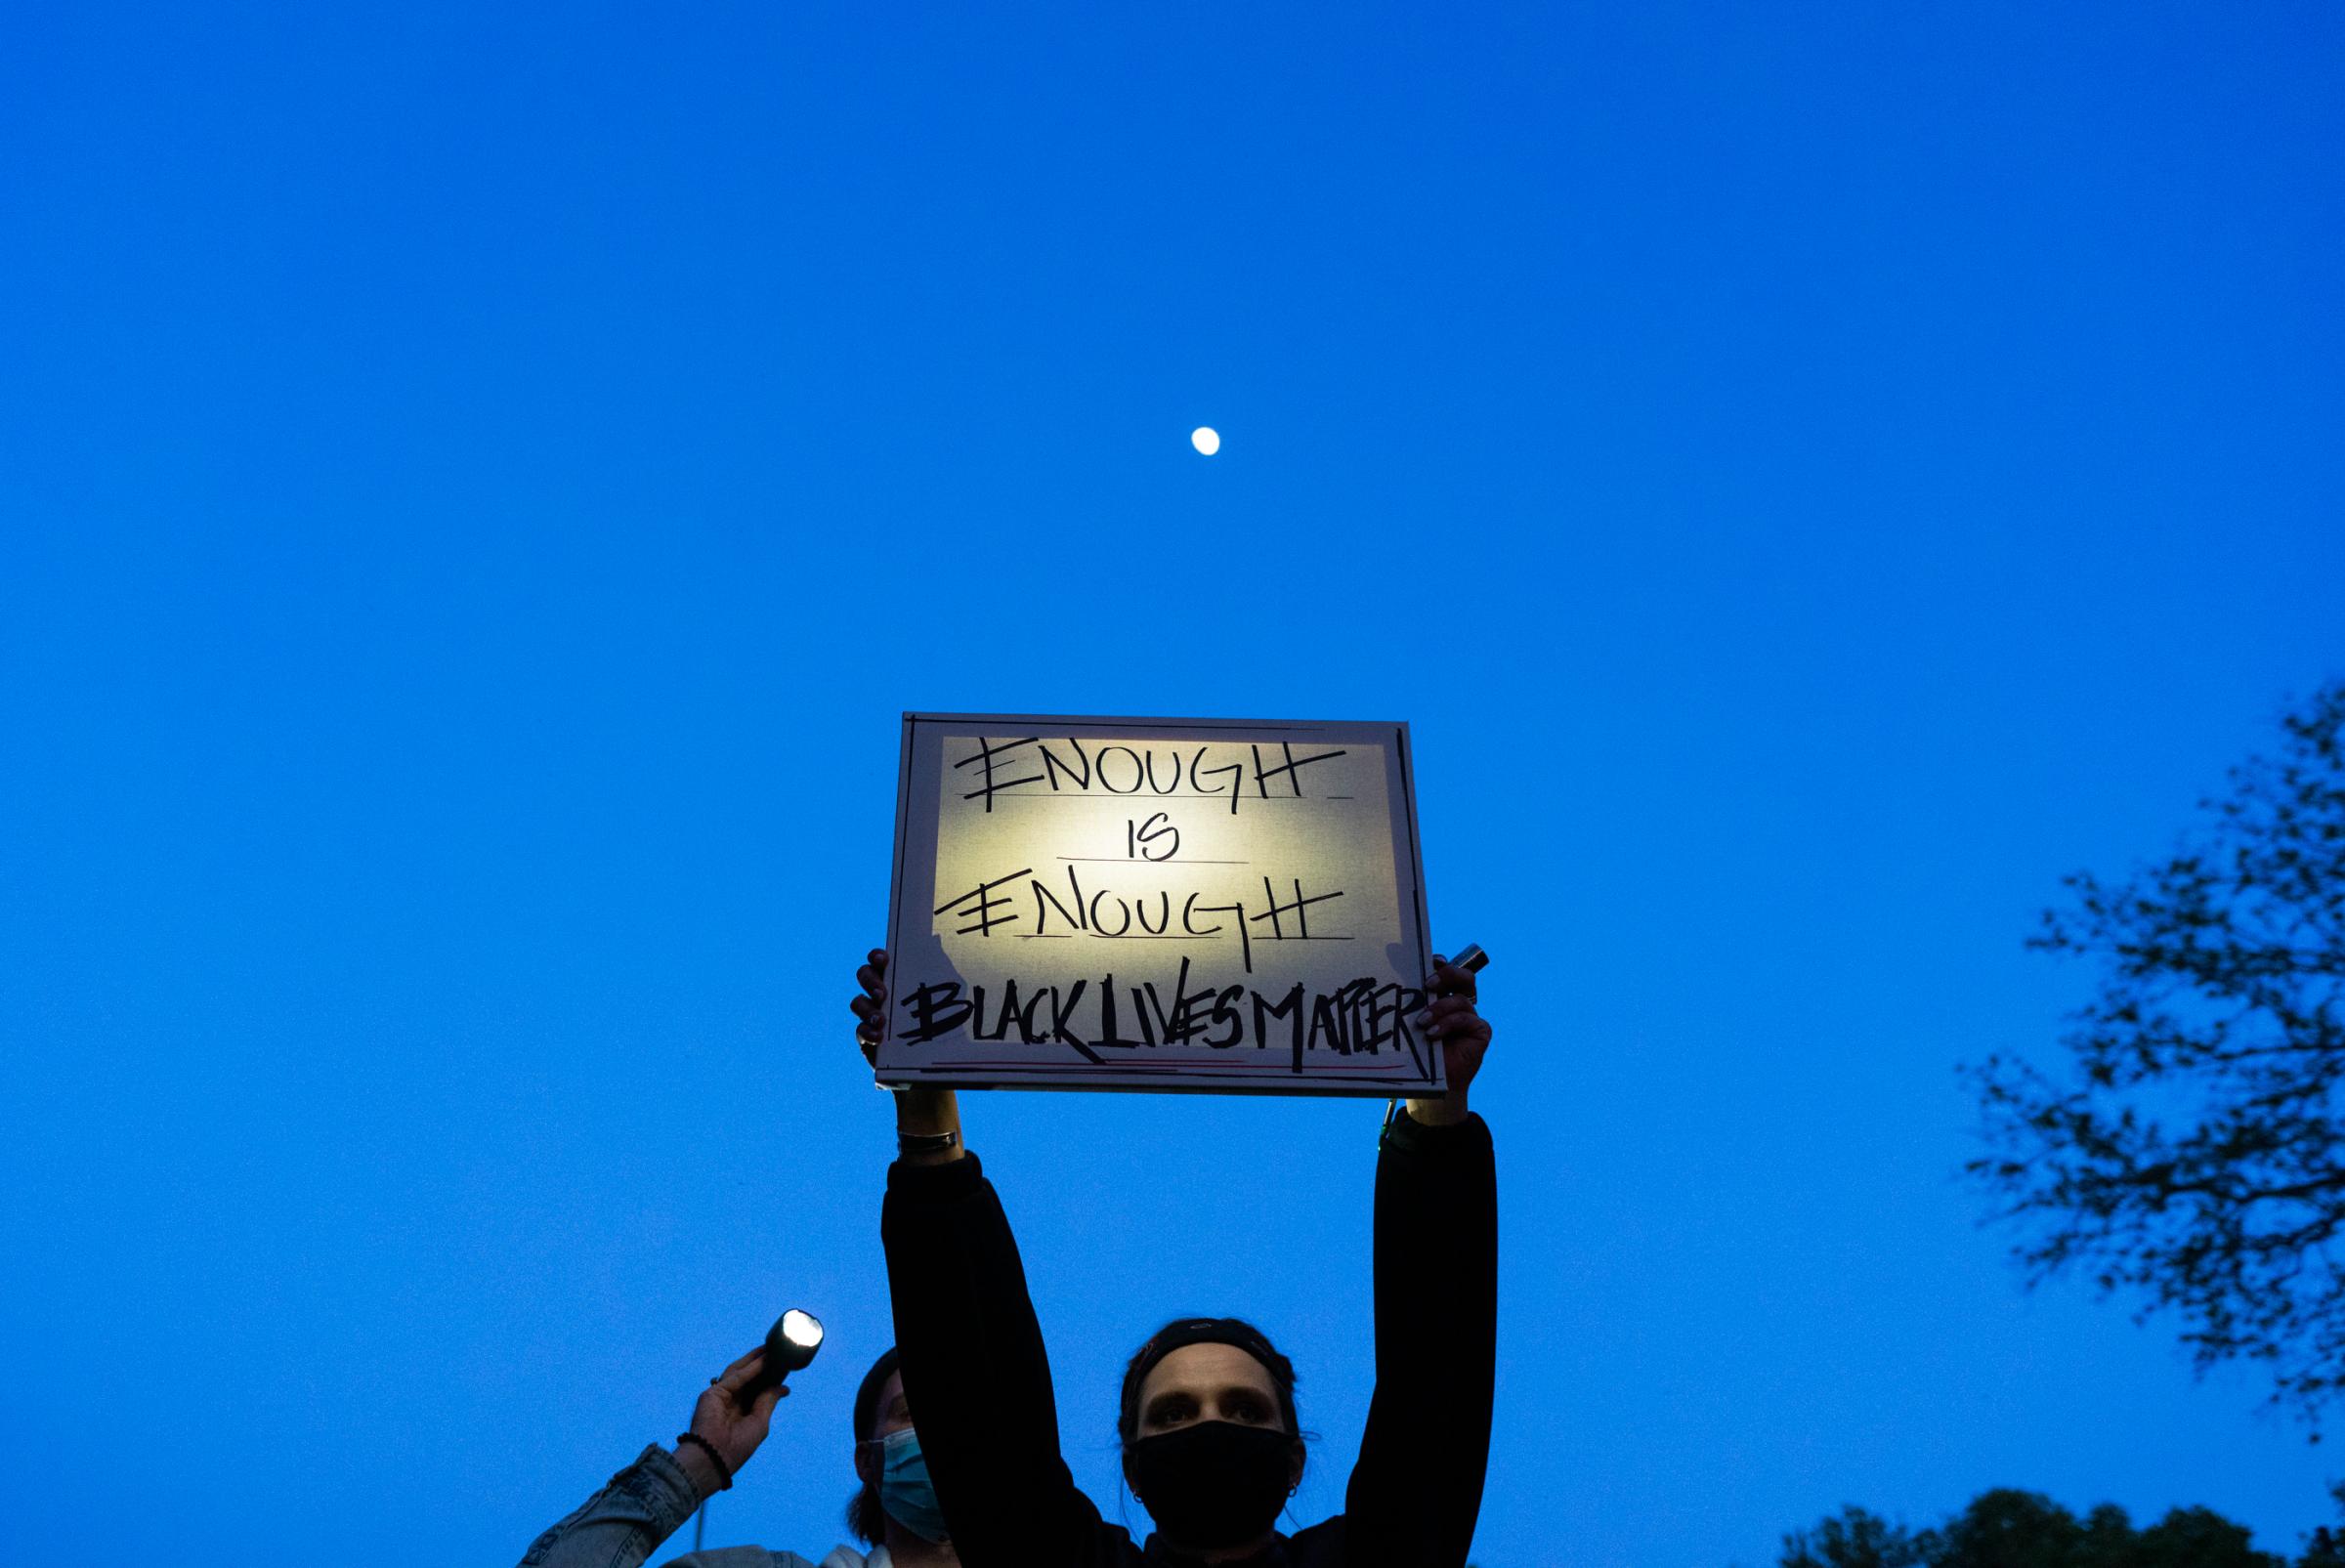 Black Lives Matter Movement 2020 - A vigil attendee holds a Black Lives Matter sign during a...